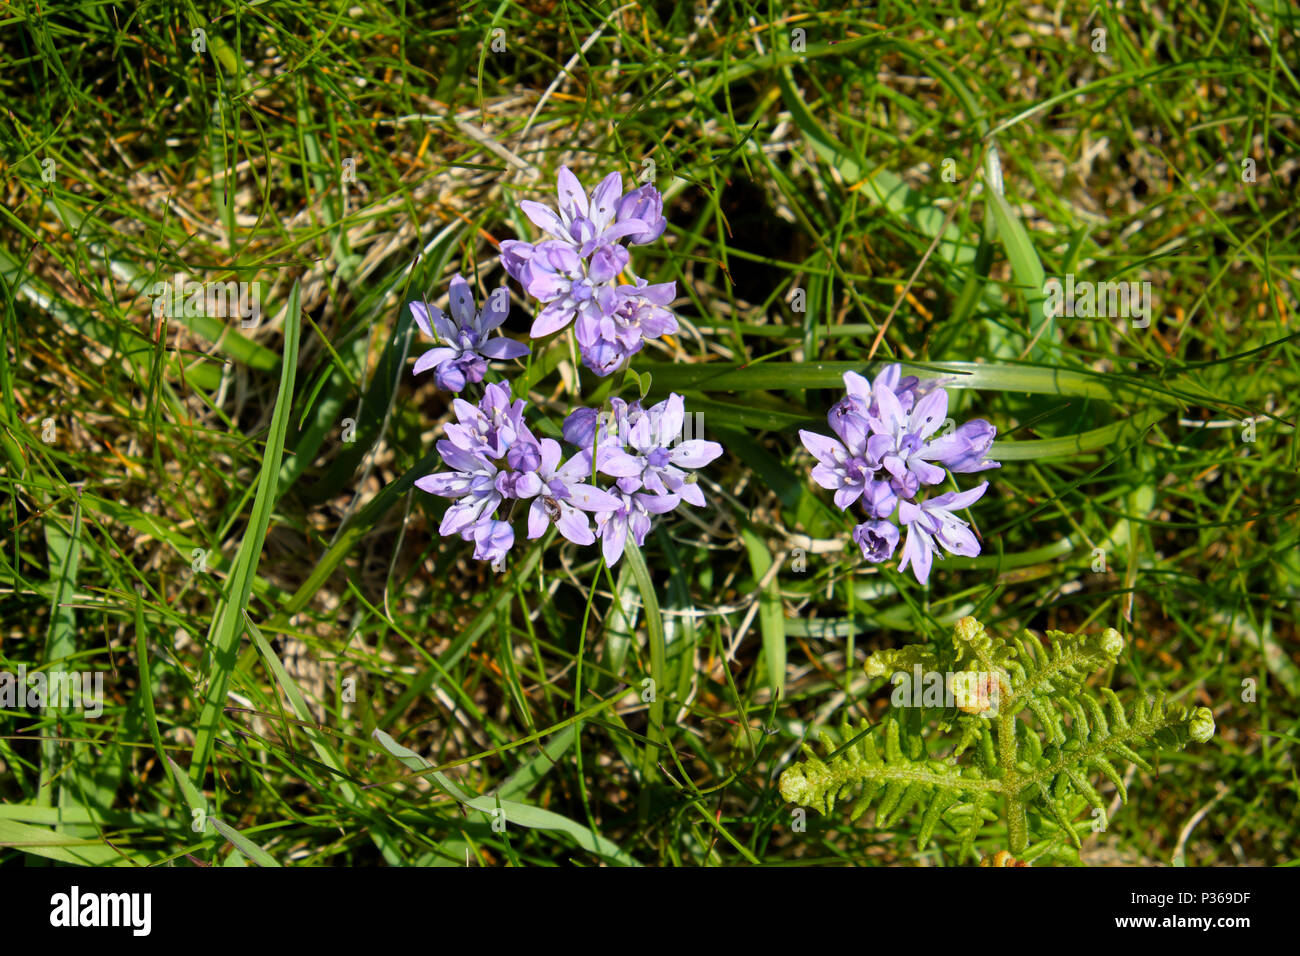 Wildflowers growing by a roadside in Marloes, Pembrokeshire near the Pembrokeshire Coast path in West Wales UK  KATHY DEWITT Stock Photo